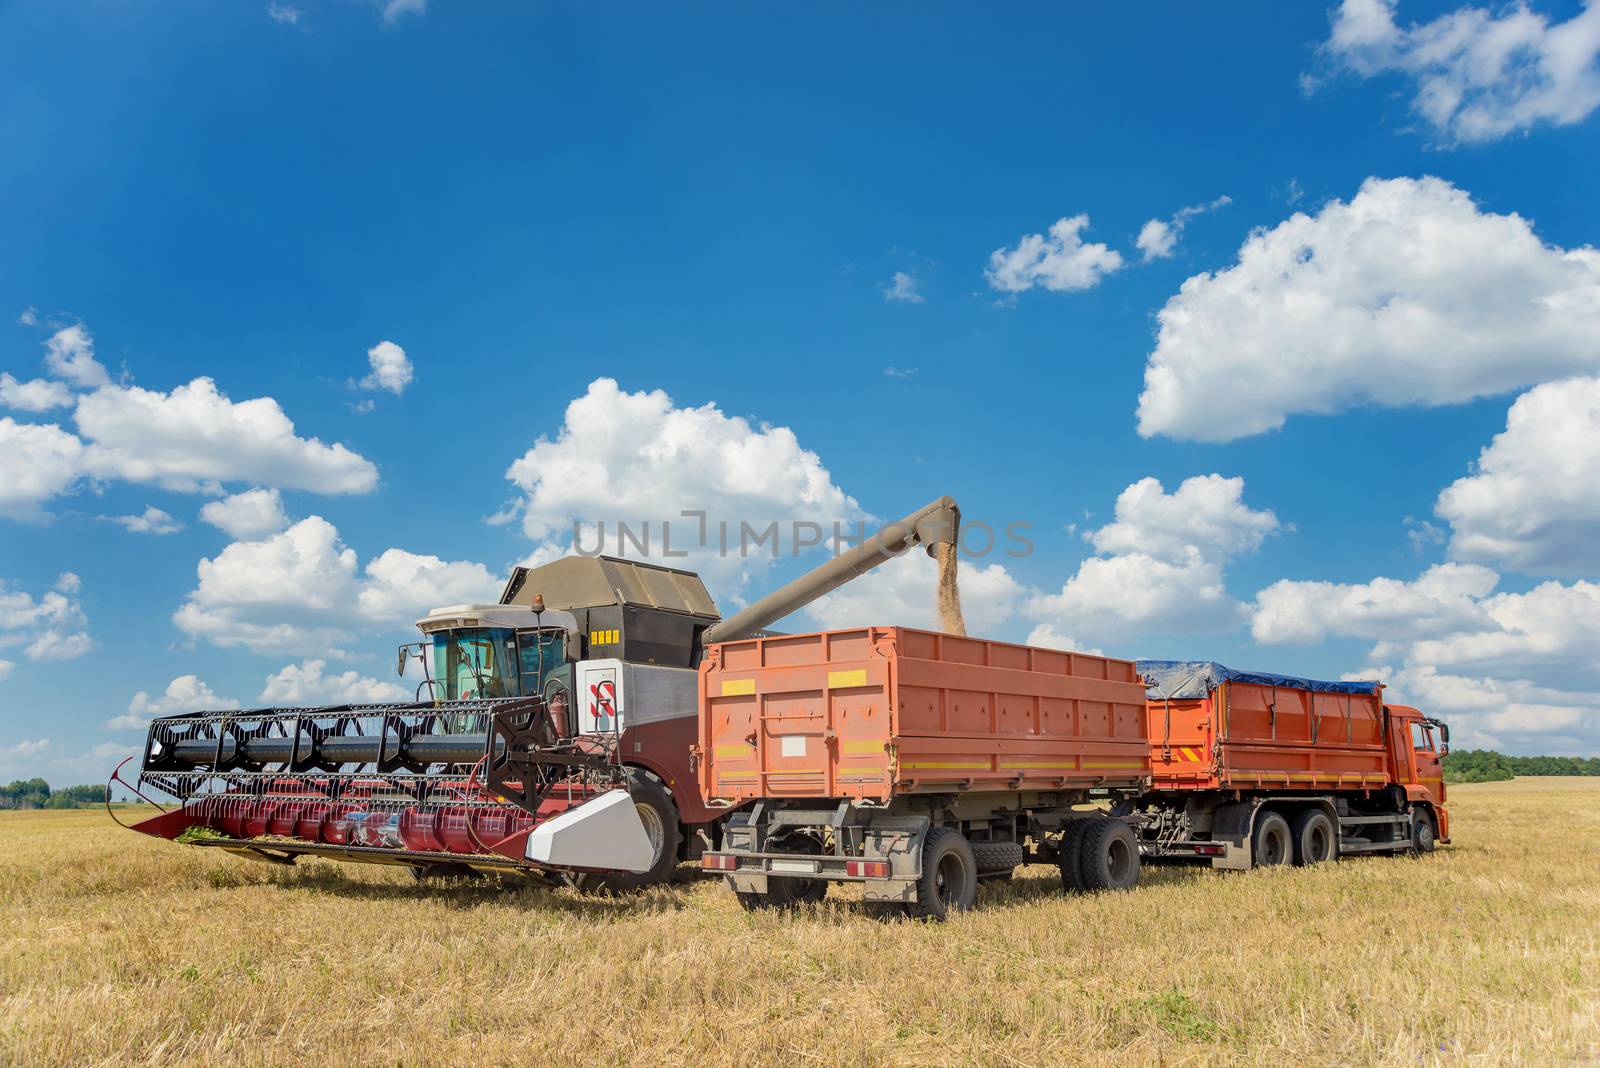 Combine harvester loading grain into a transport truck by Epitavi